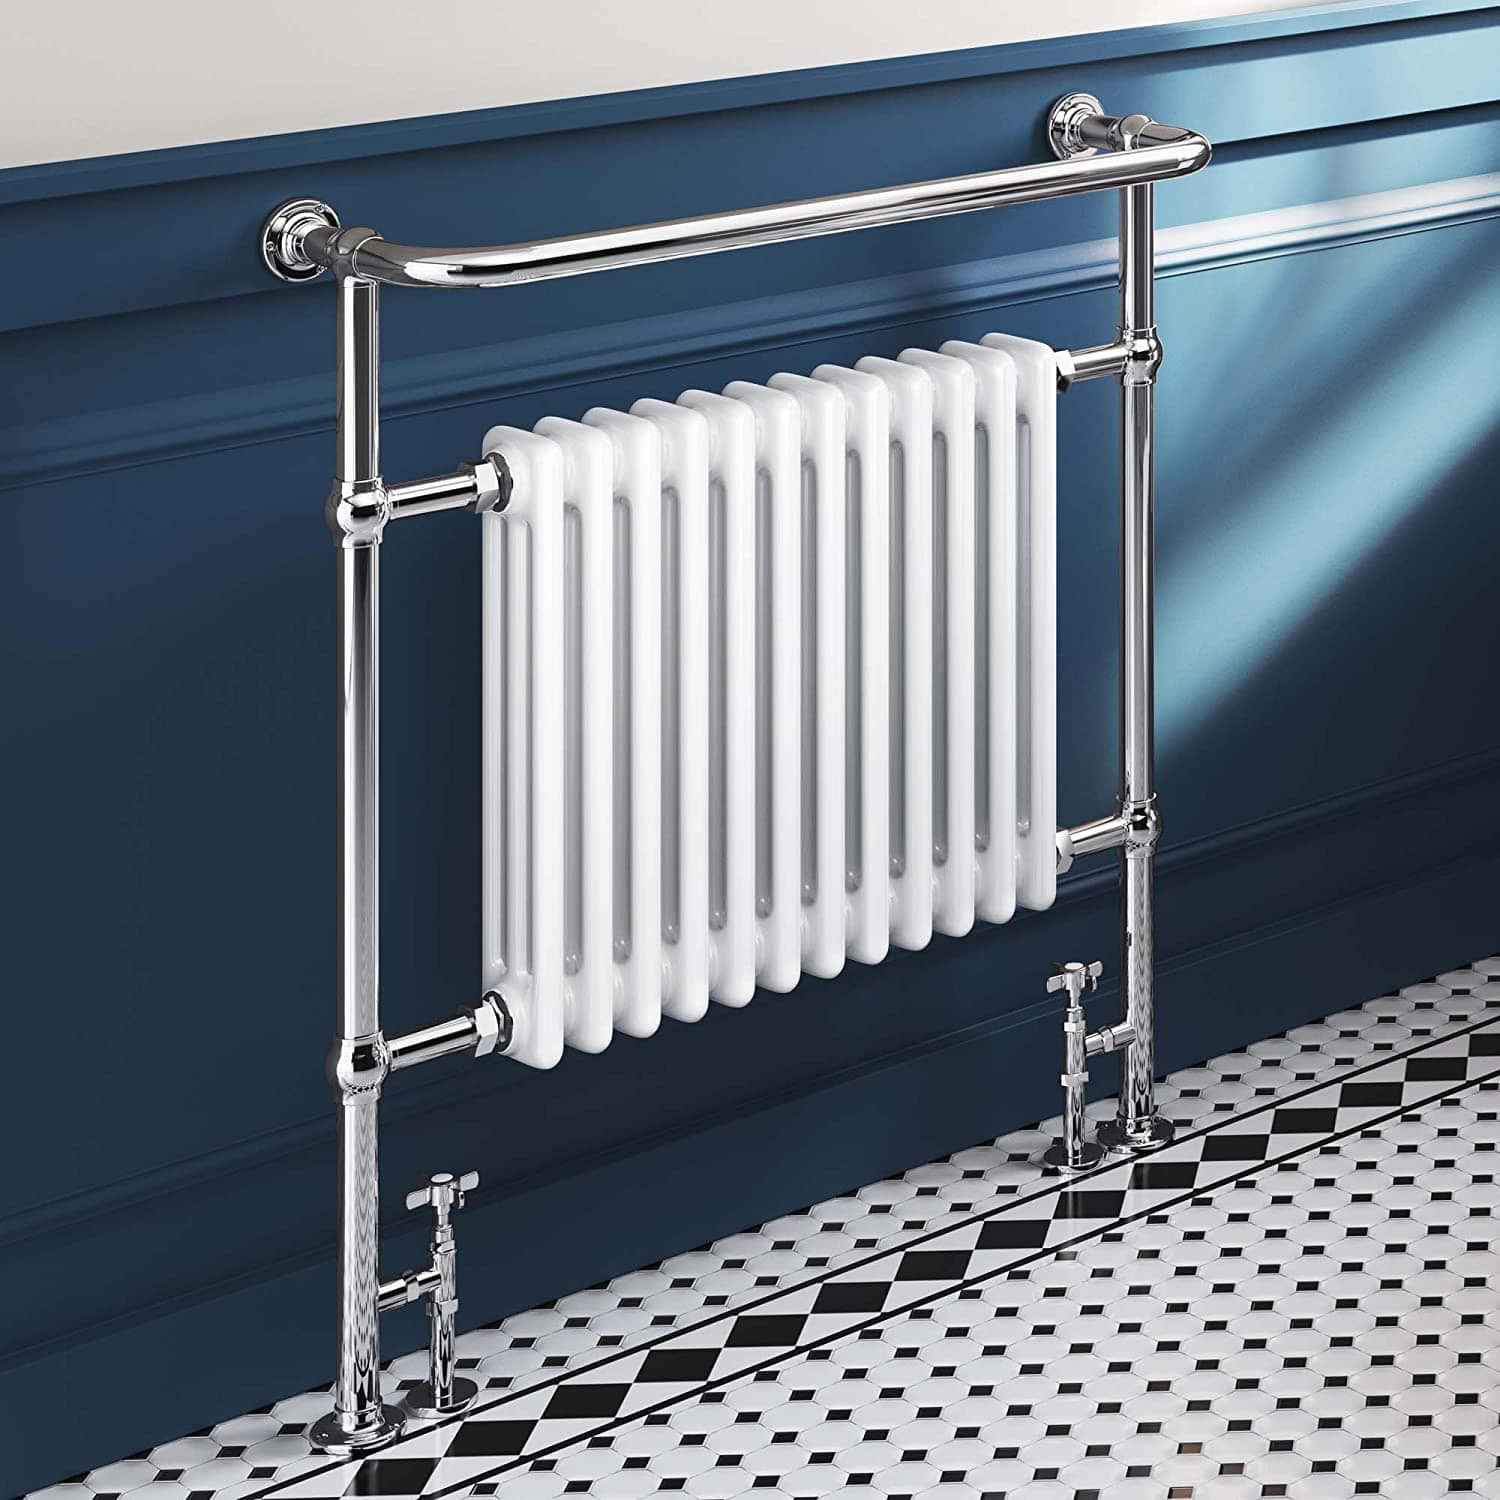 Bathroom4less Heating,Heated Towel Rails,Column Radiators 839mm x 952mm Vintage Vertical Heated Towel Radiator - 4 Column - Chrome&White